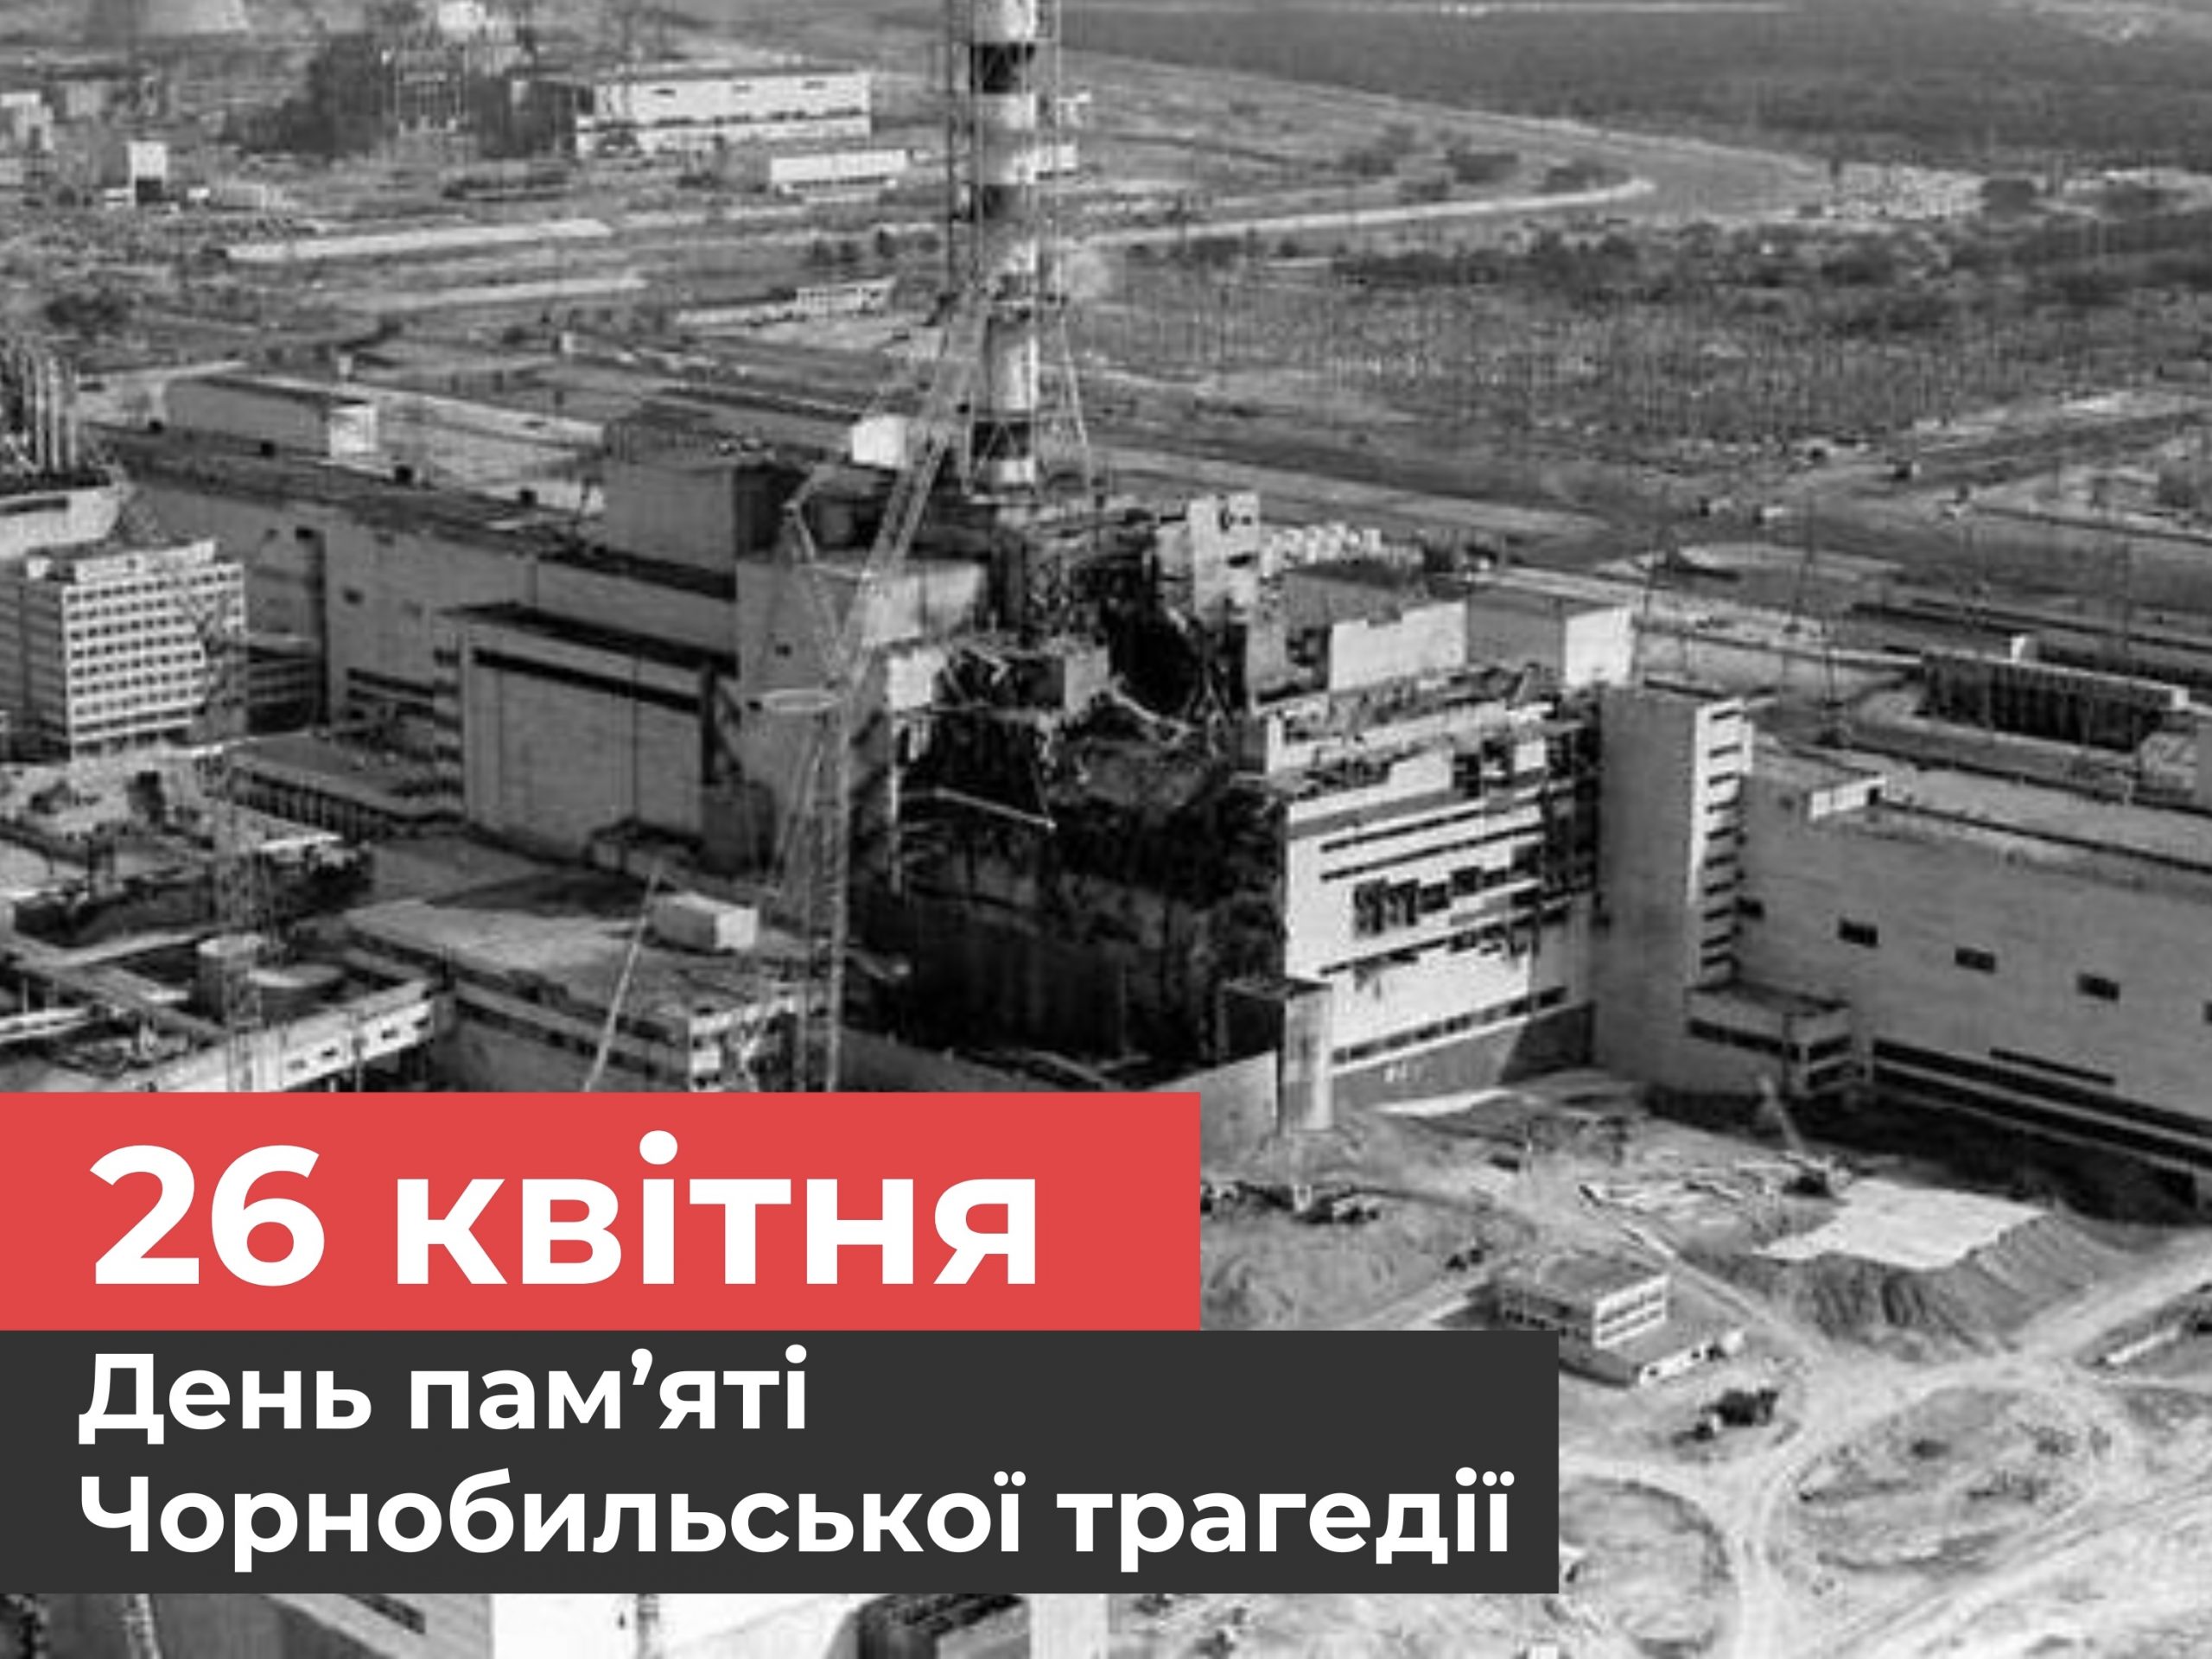 April 26 – International Chornobyl Disaster Remembrance Day